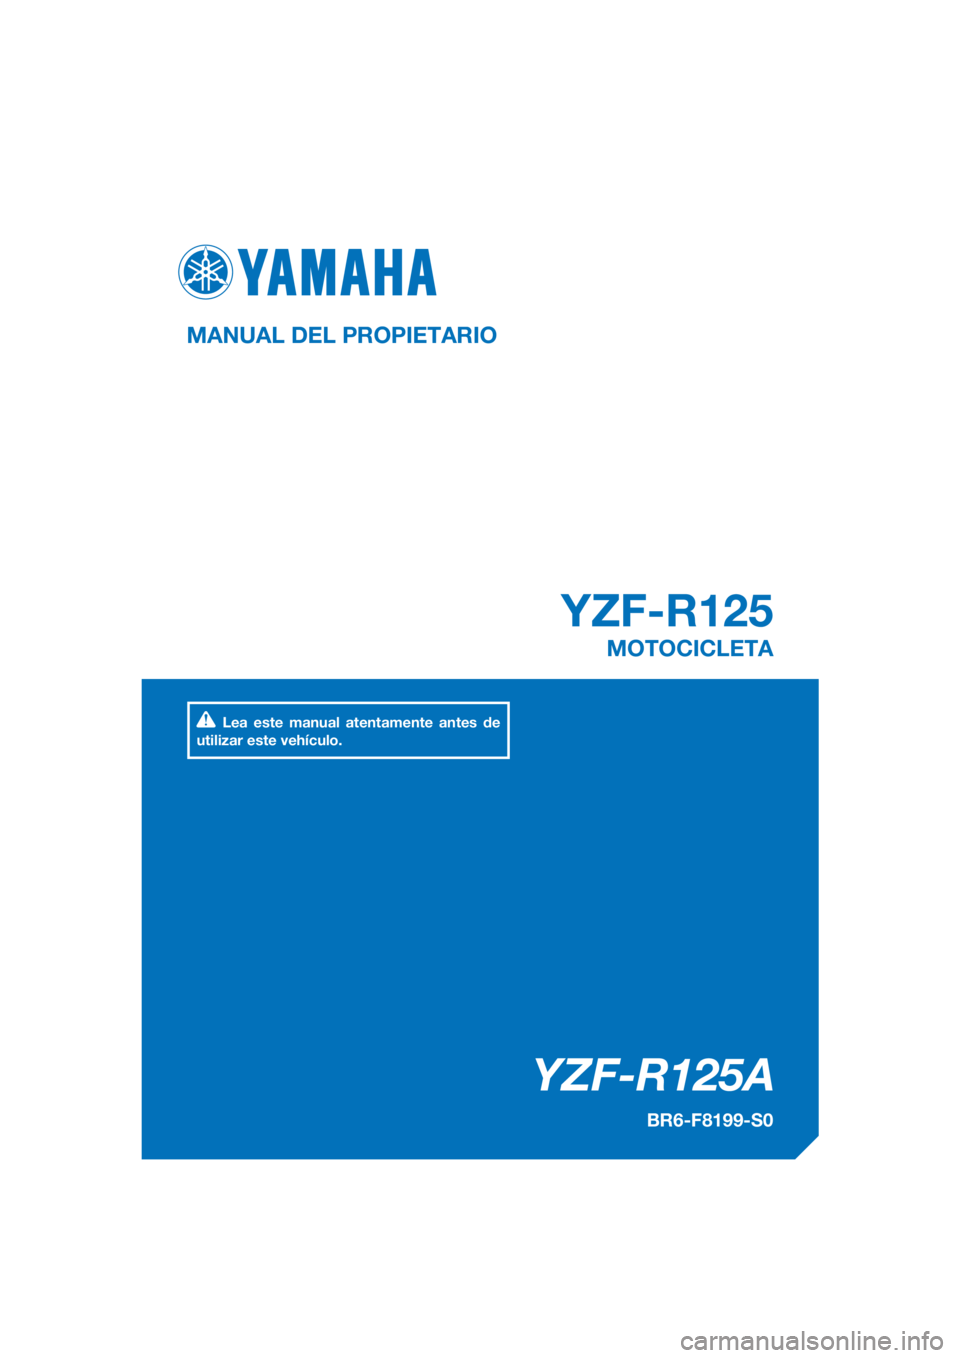 YAMAHA YZF-R125 2018  Manuale de Empleo (in Spanish) 